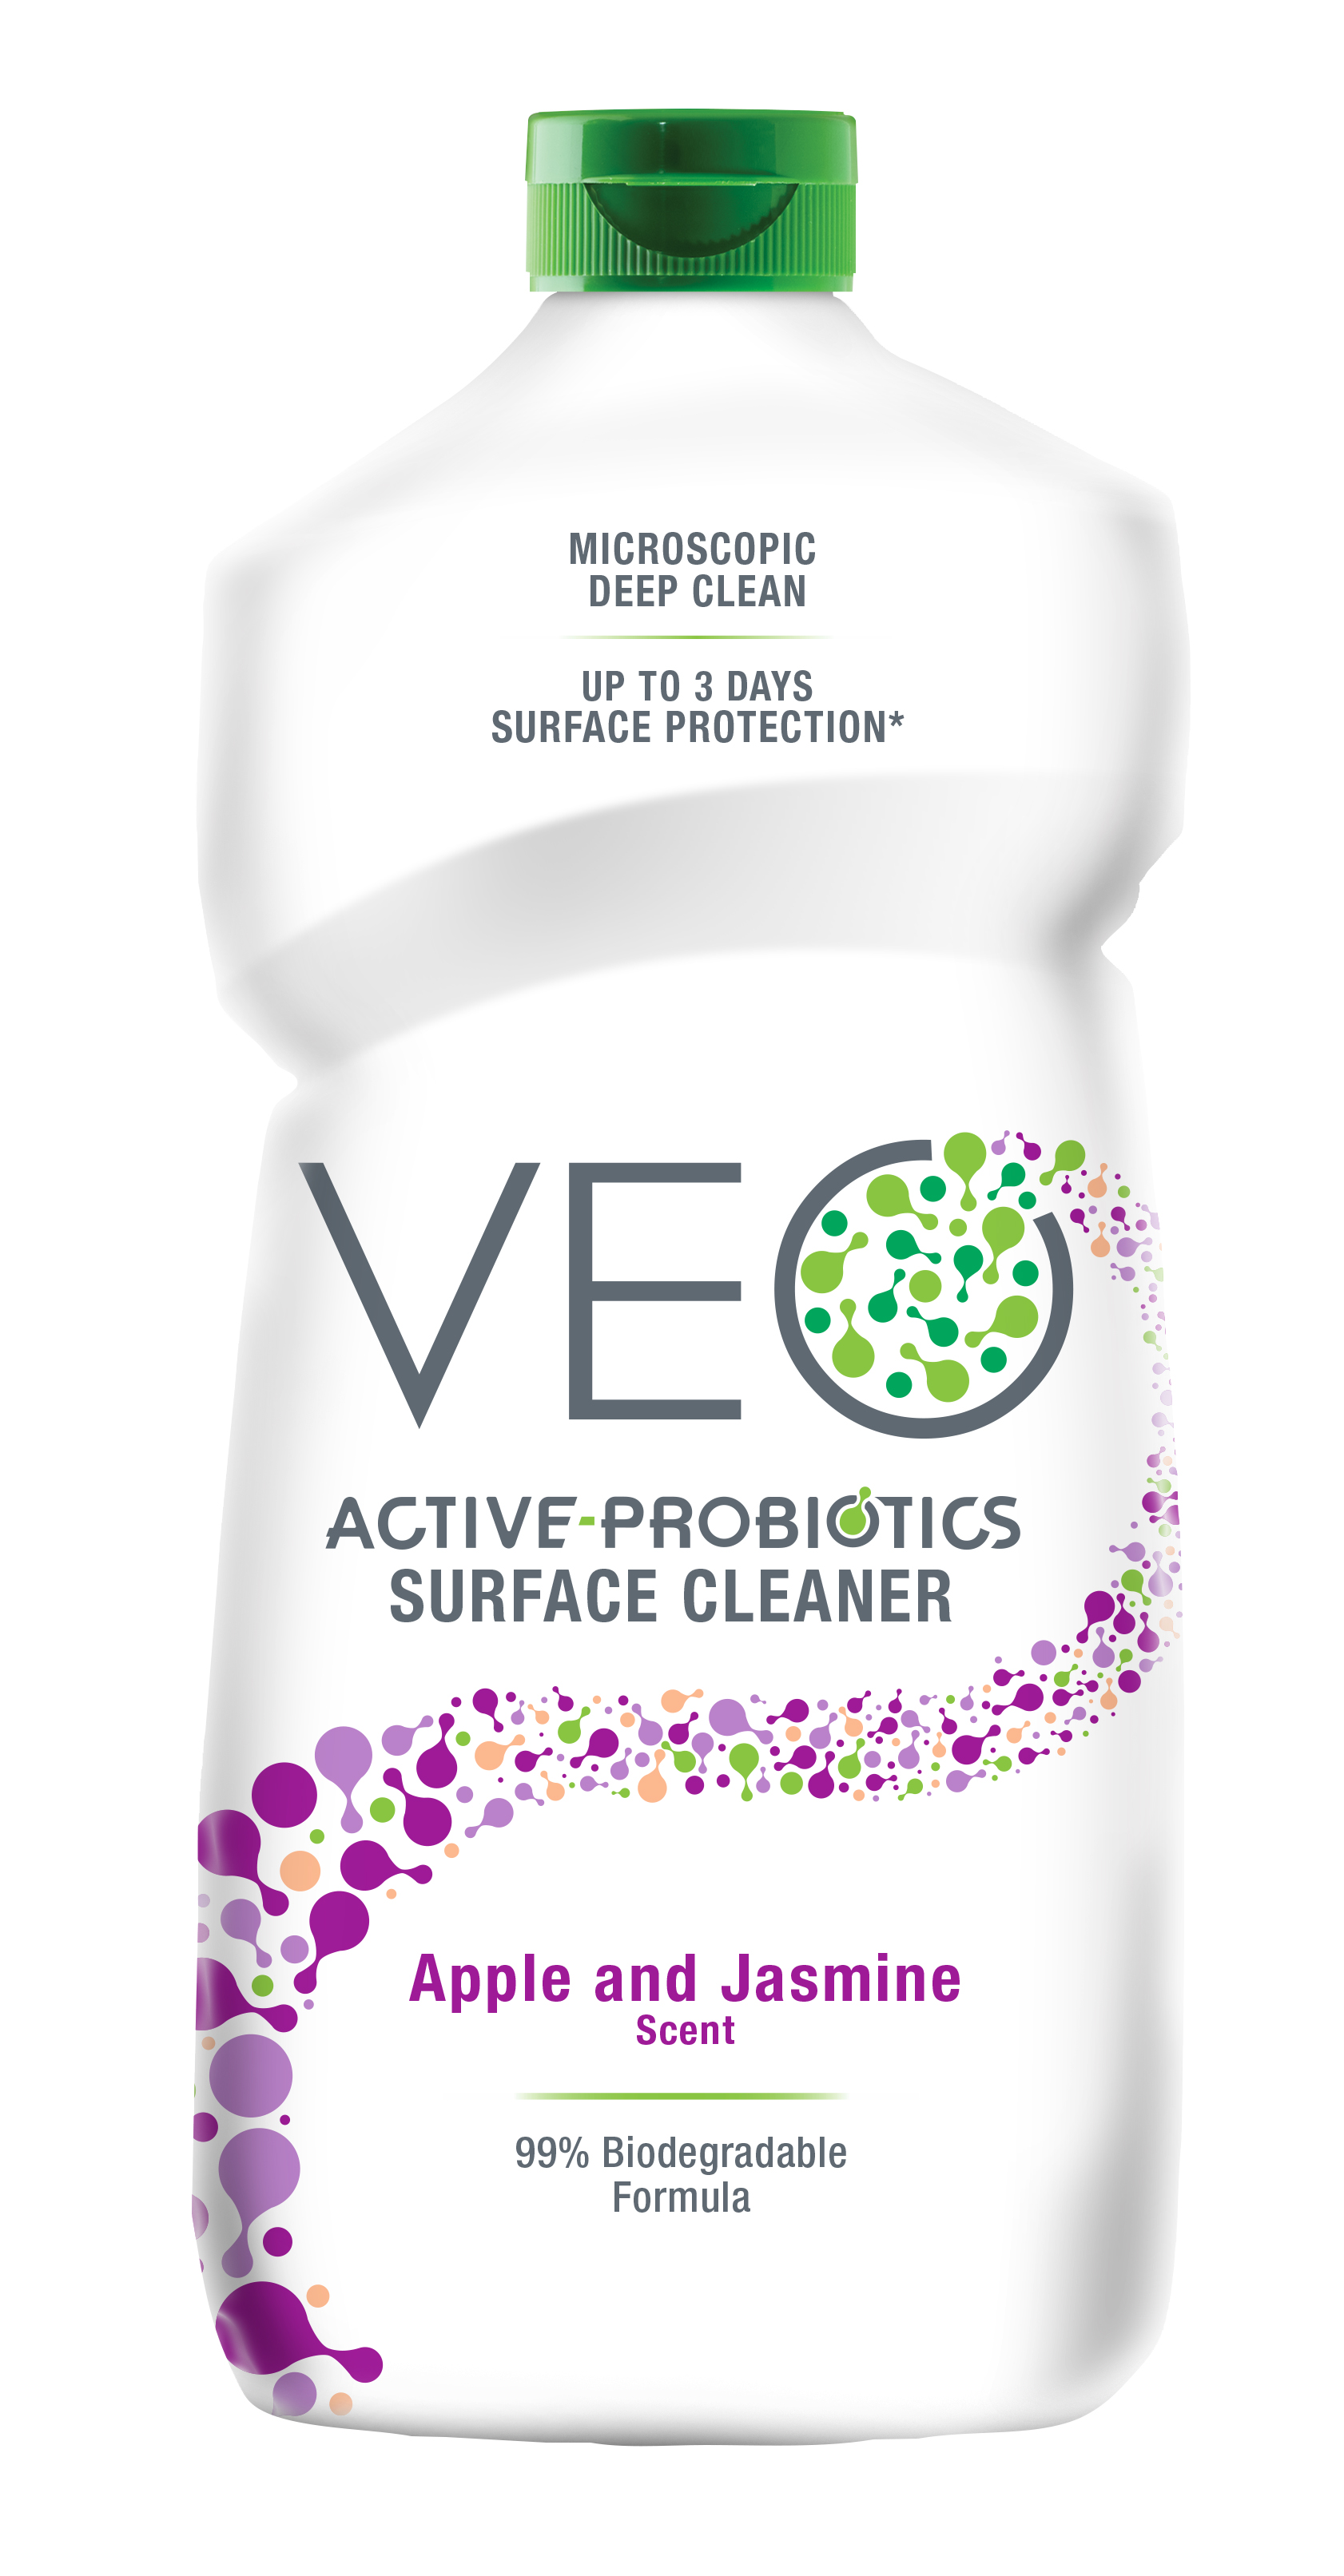 Veo Active-Probiotics Surface Cleaner - Apple and Jasmine Scent